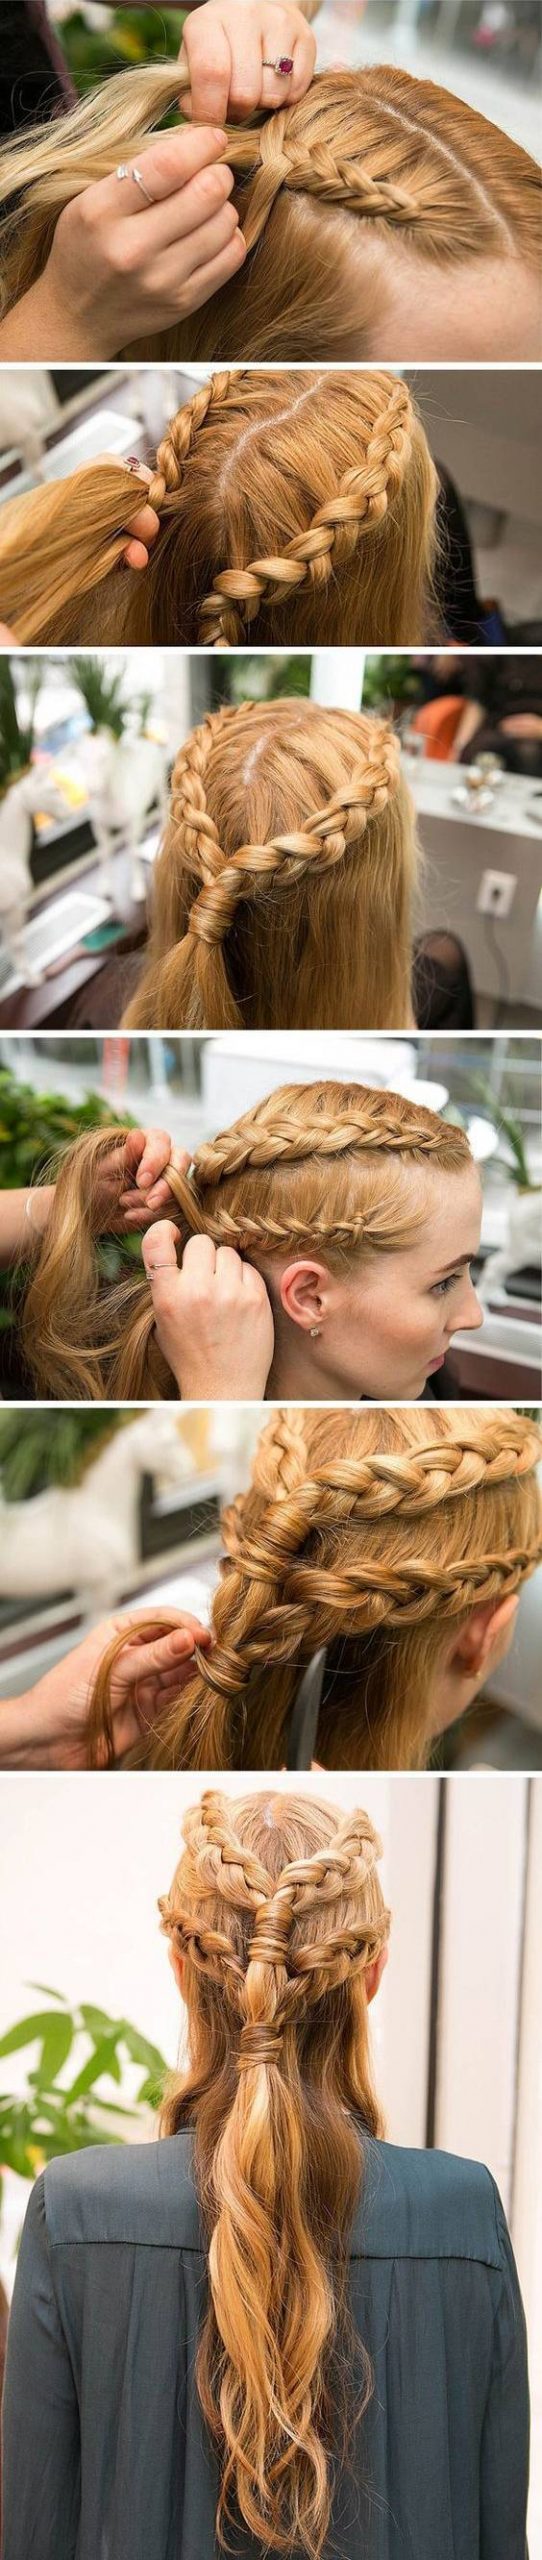 JamAdvice_com_ua_hairstyles-with-braids-for-long-hair-18